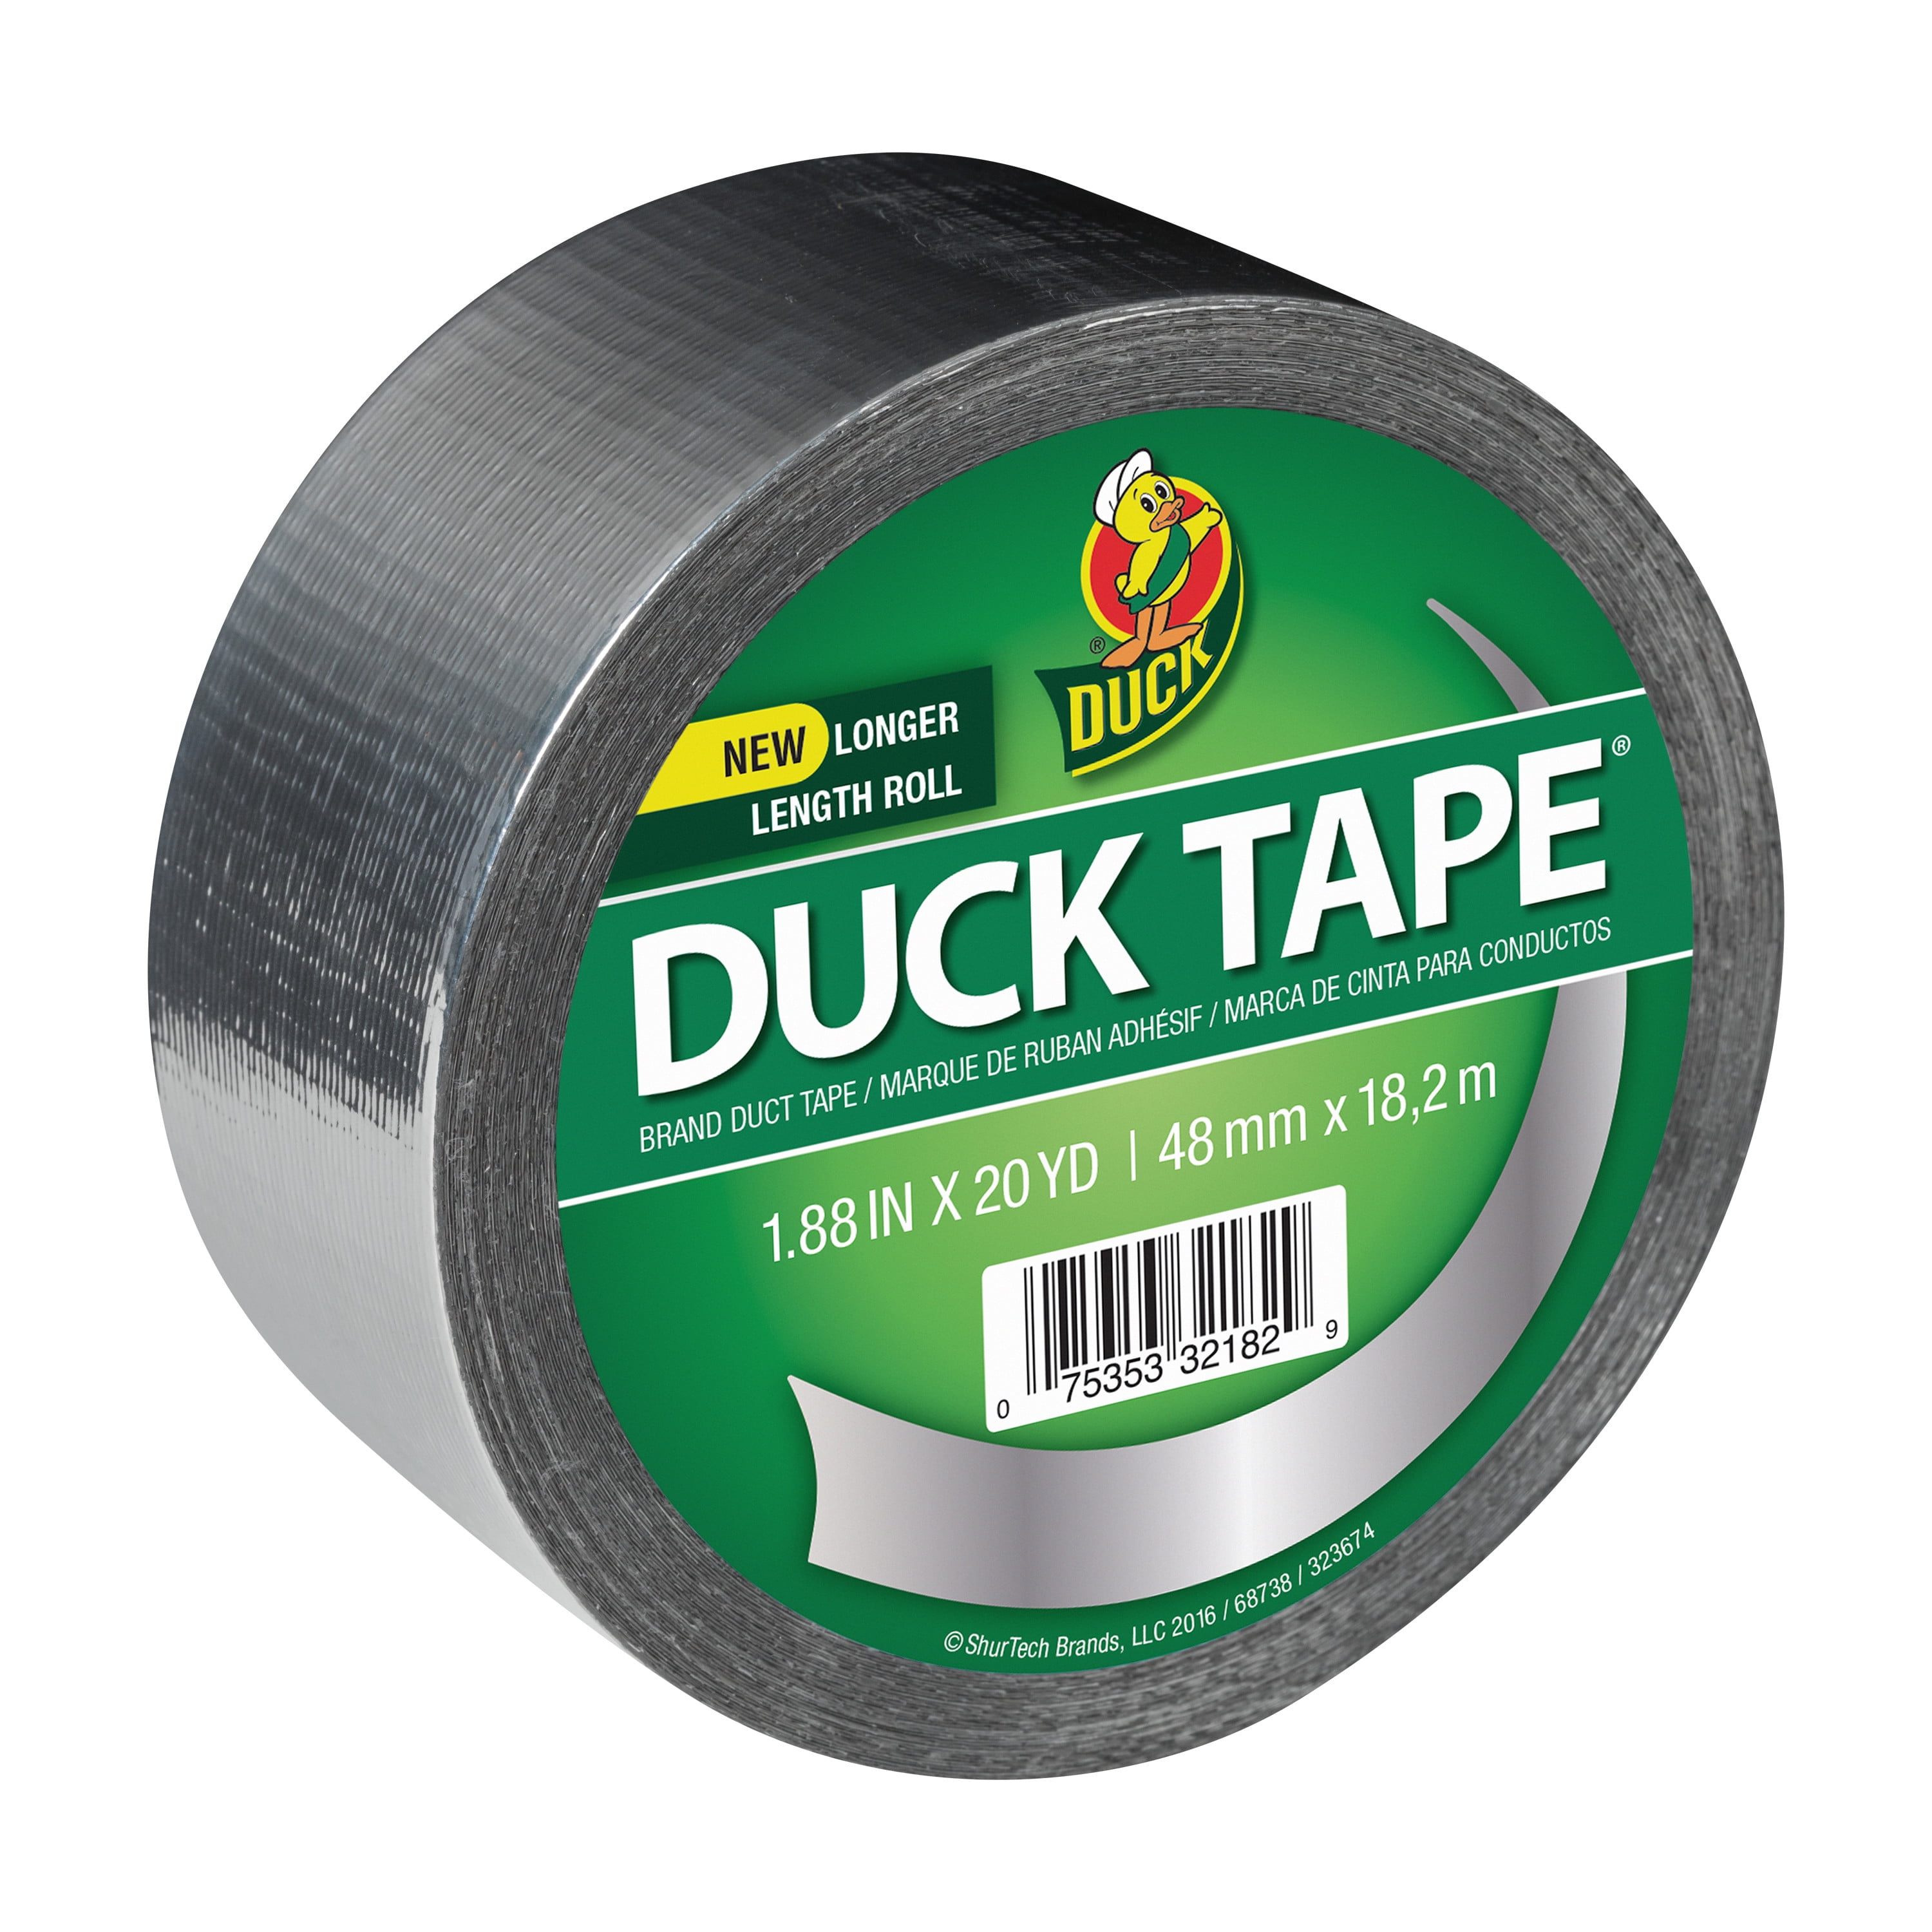 Beige Tan Duck brand Duct Tape 1.88 inch x 20 yds